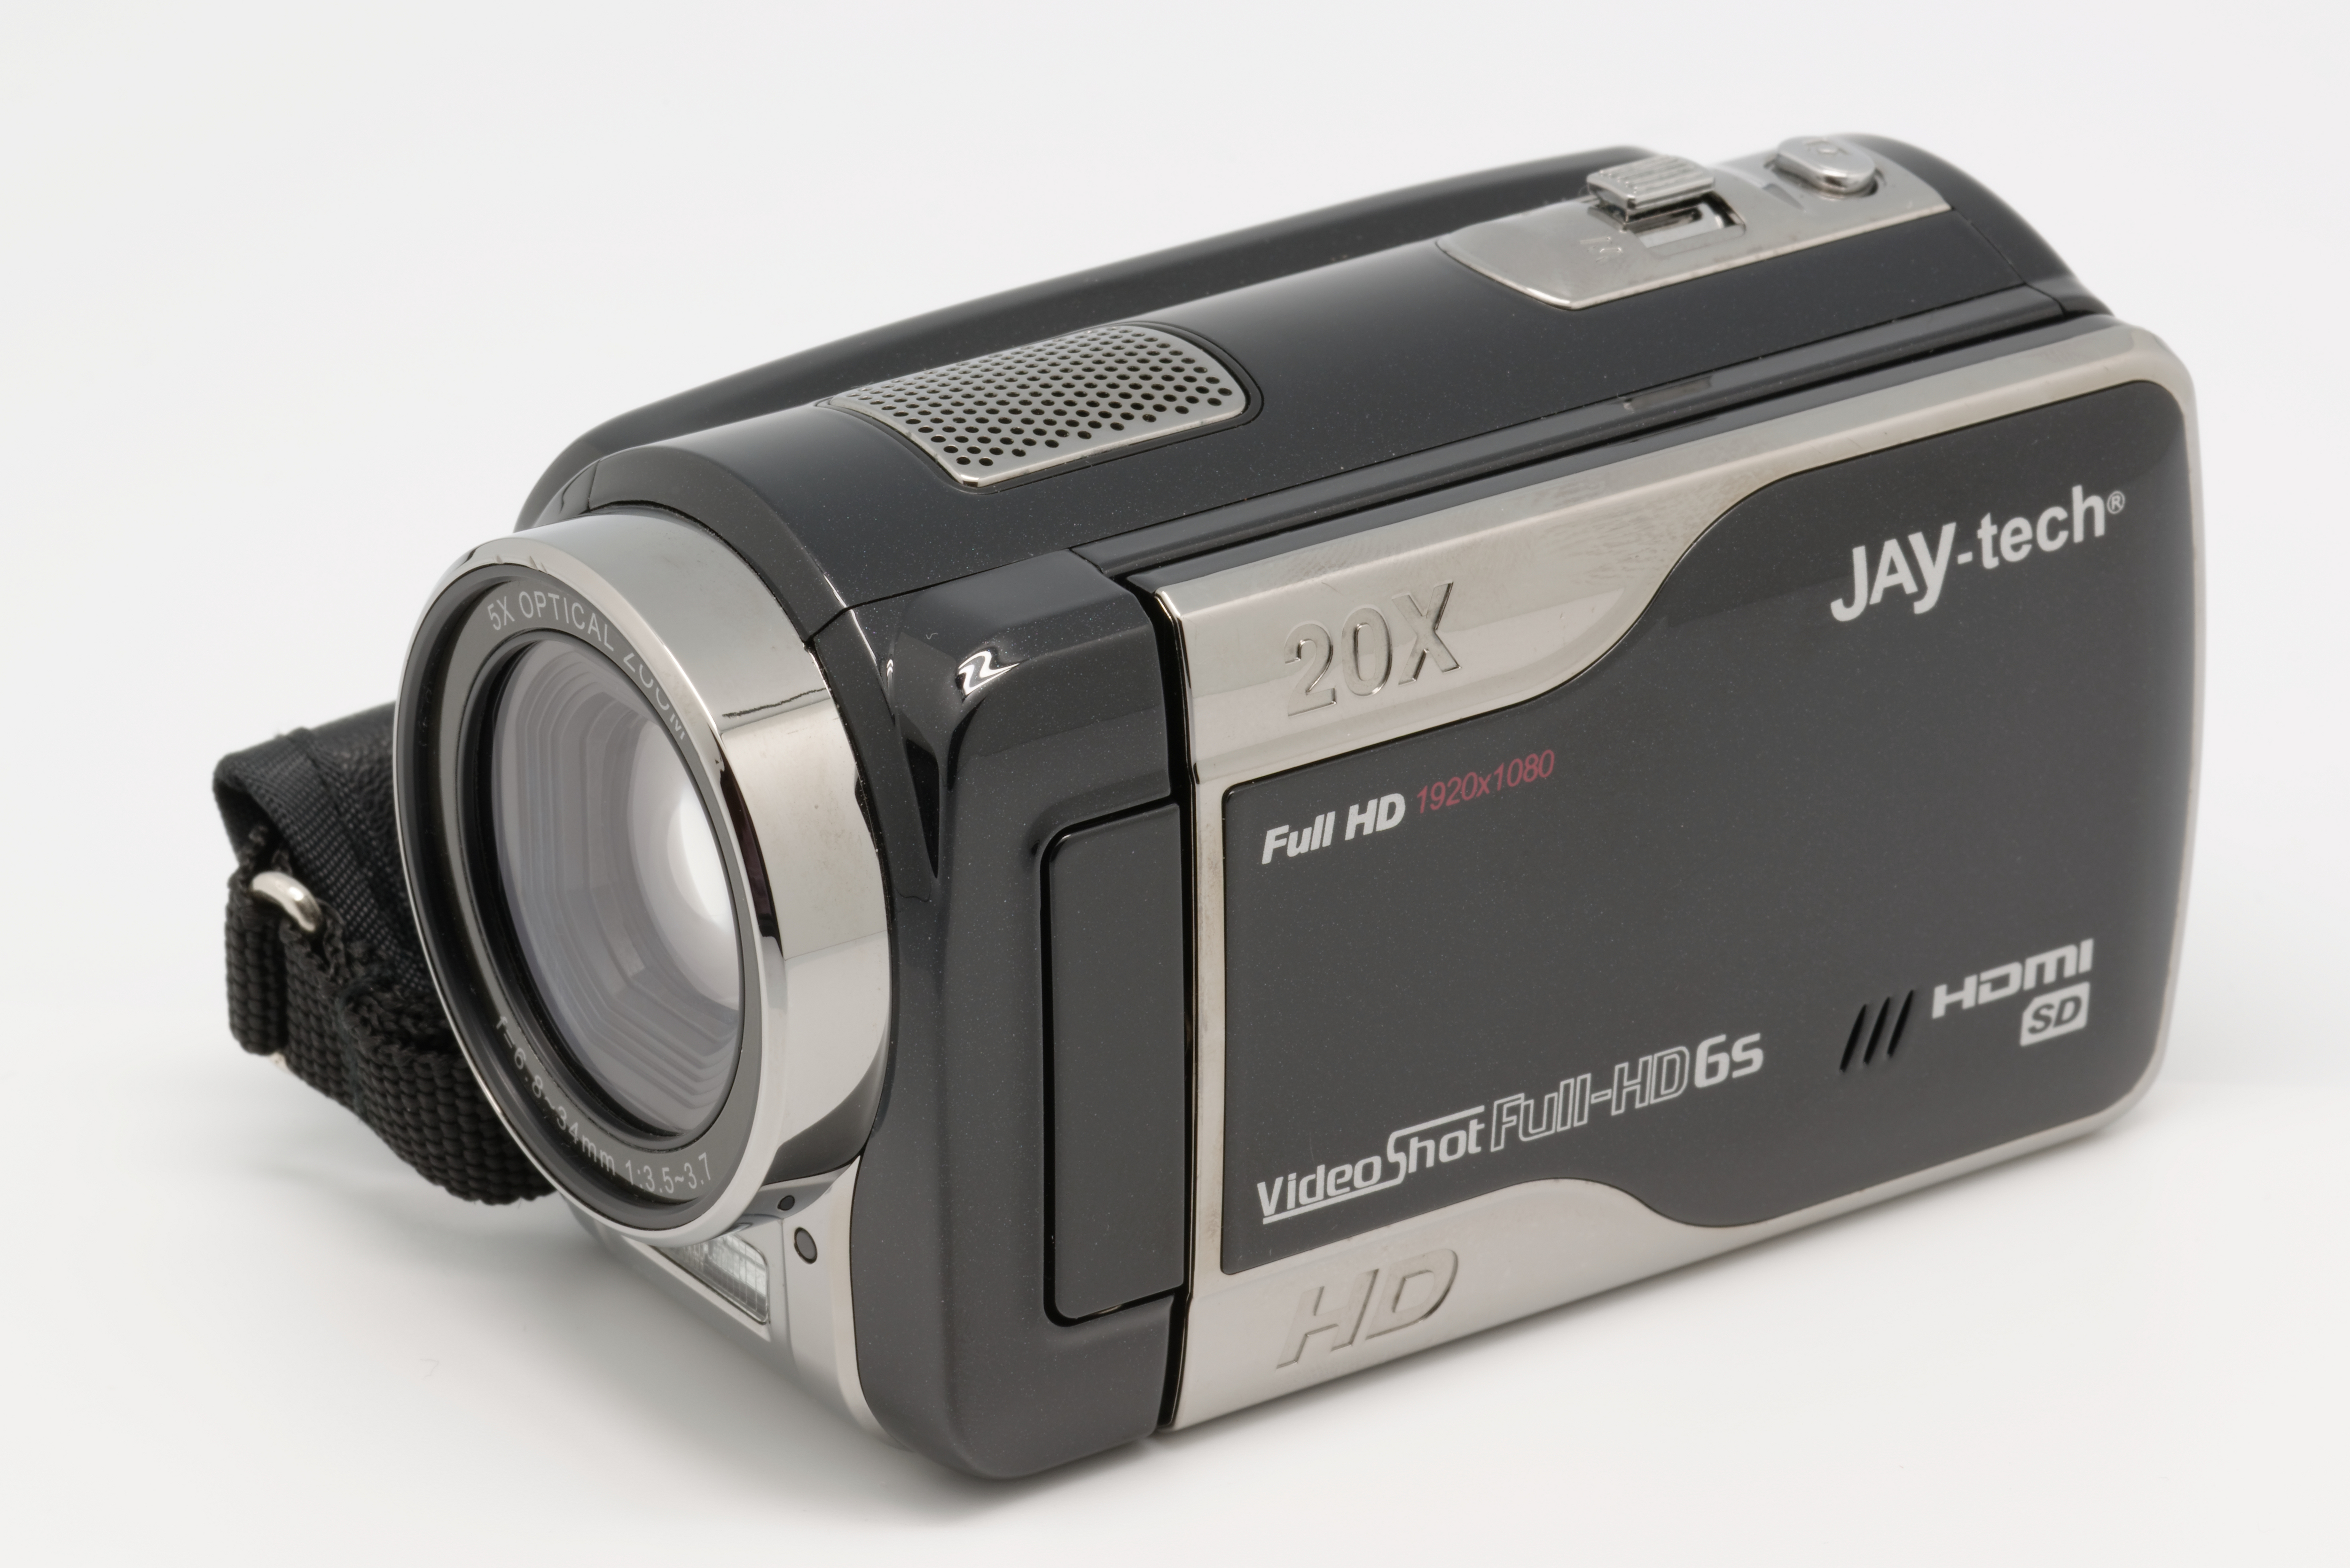 File:Jay-tech Videoshot full HD 6S n01.jpg - Wikimedia Commons